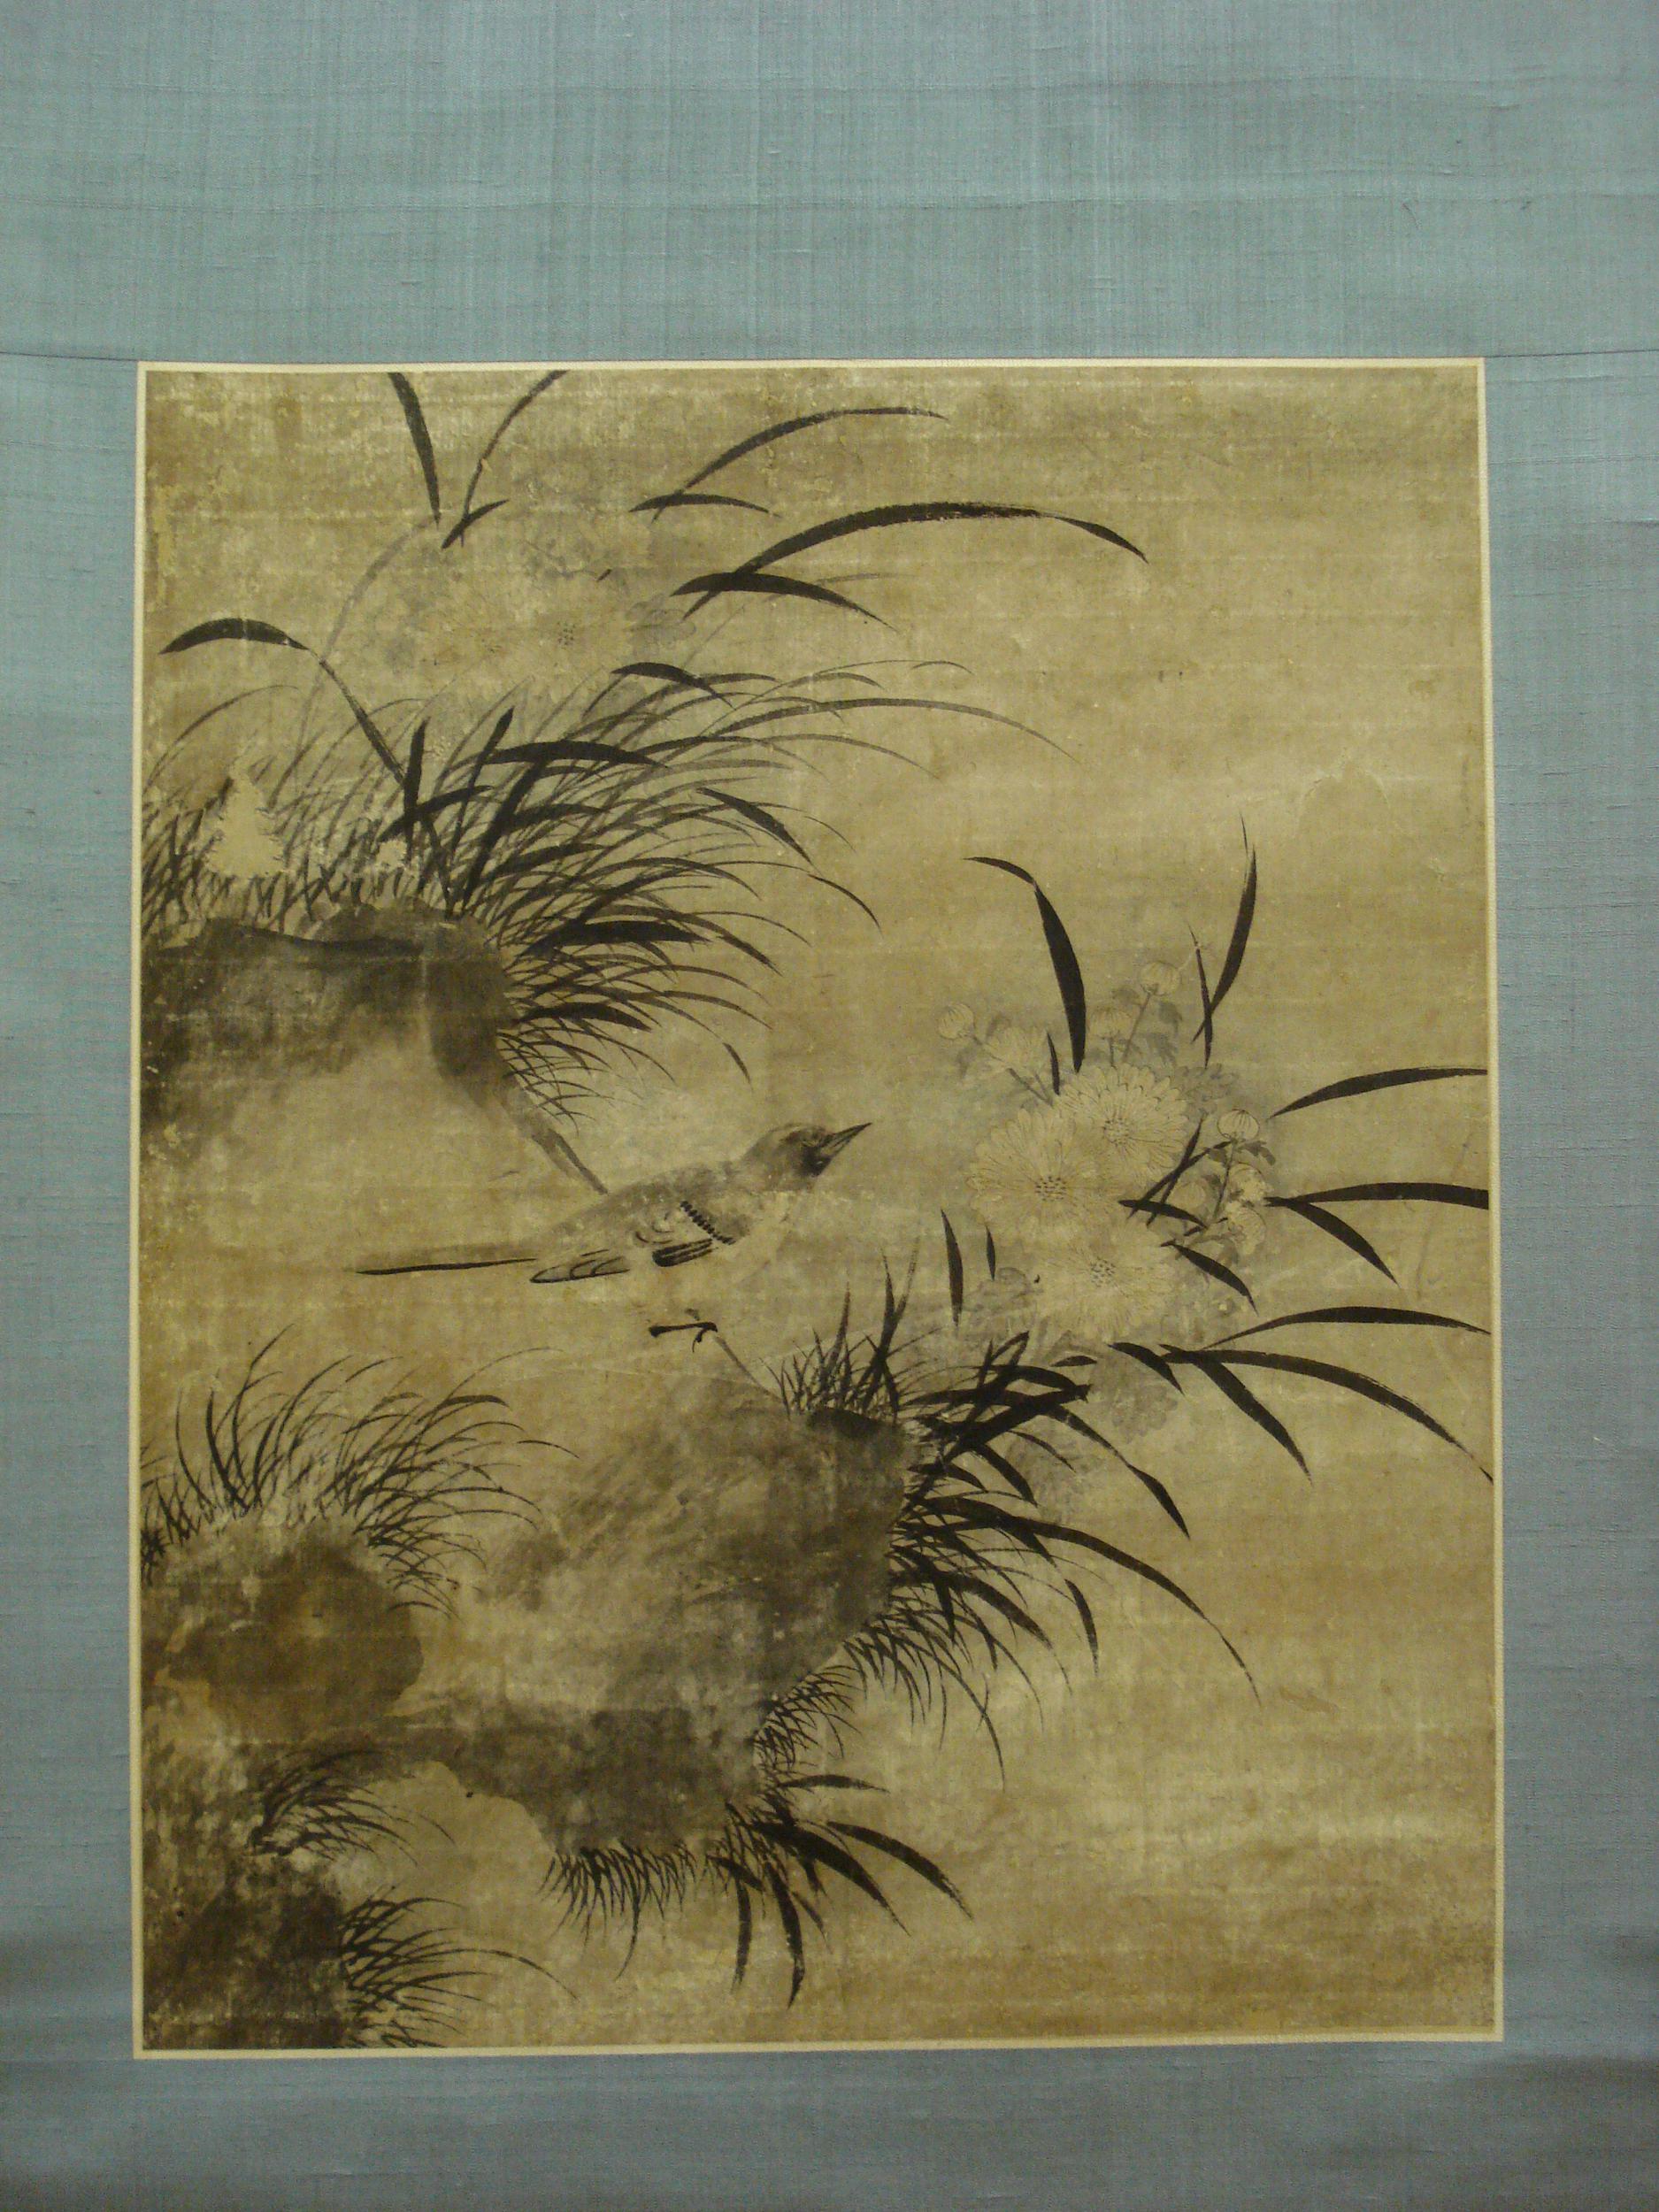 hanging scroll (화조도 花鳥圖); painting